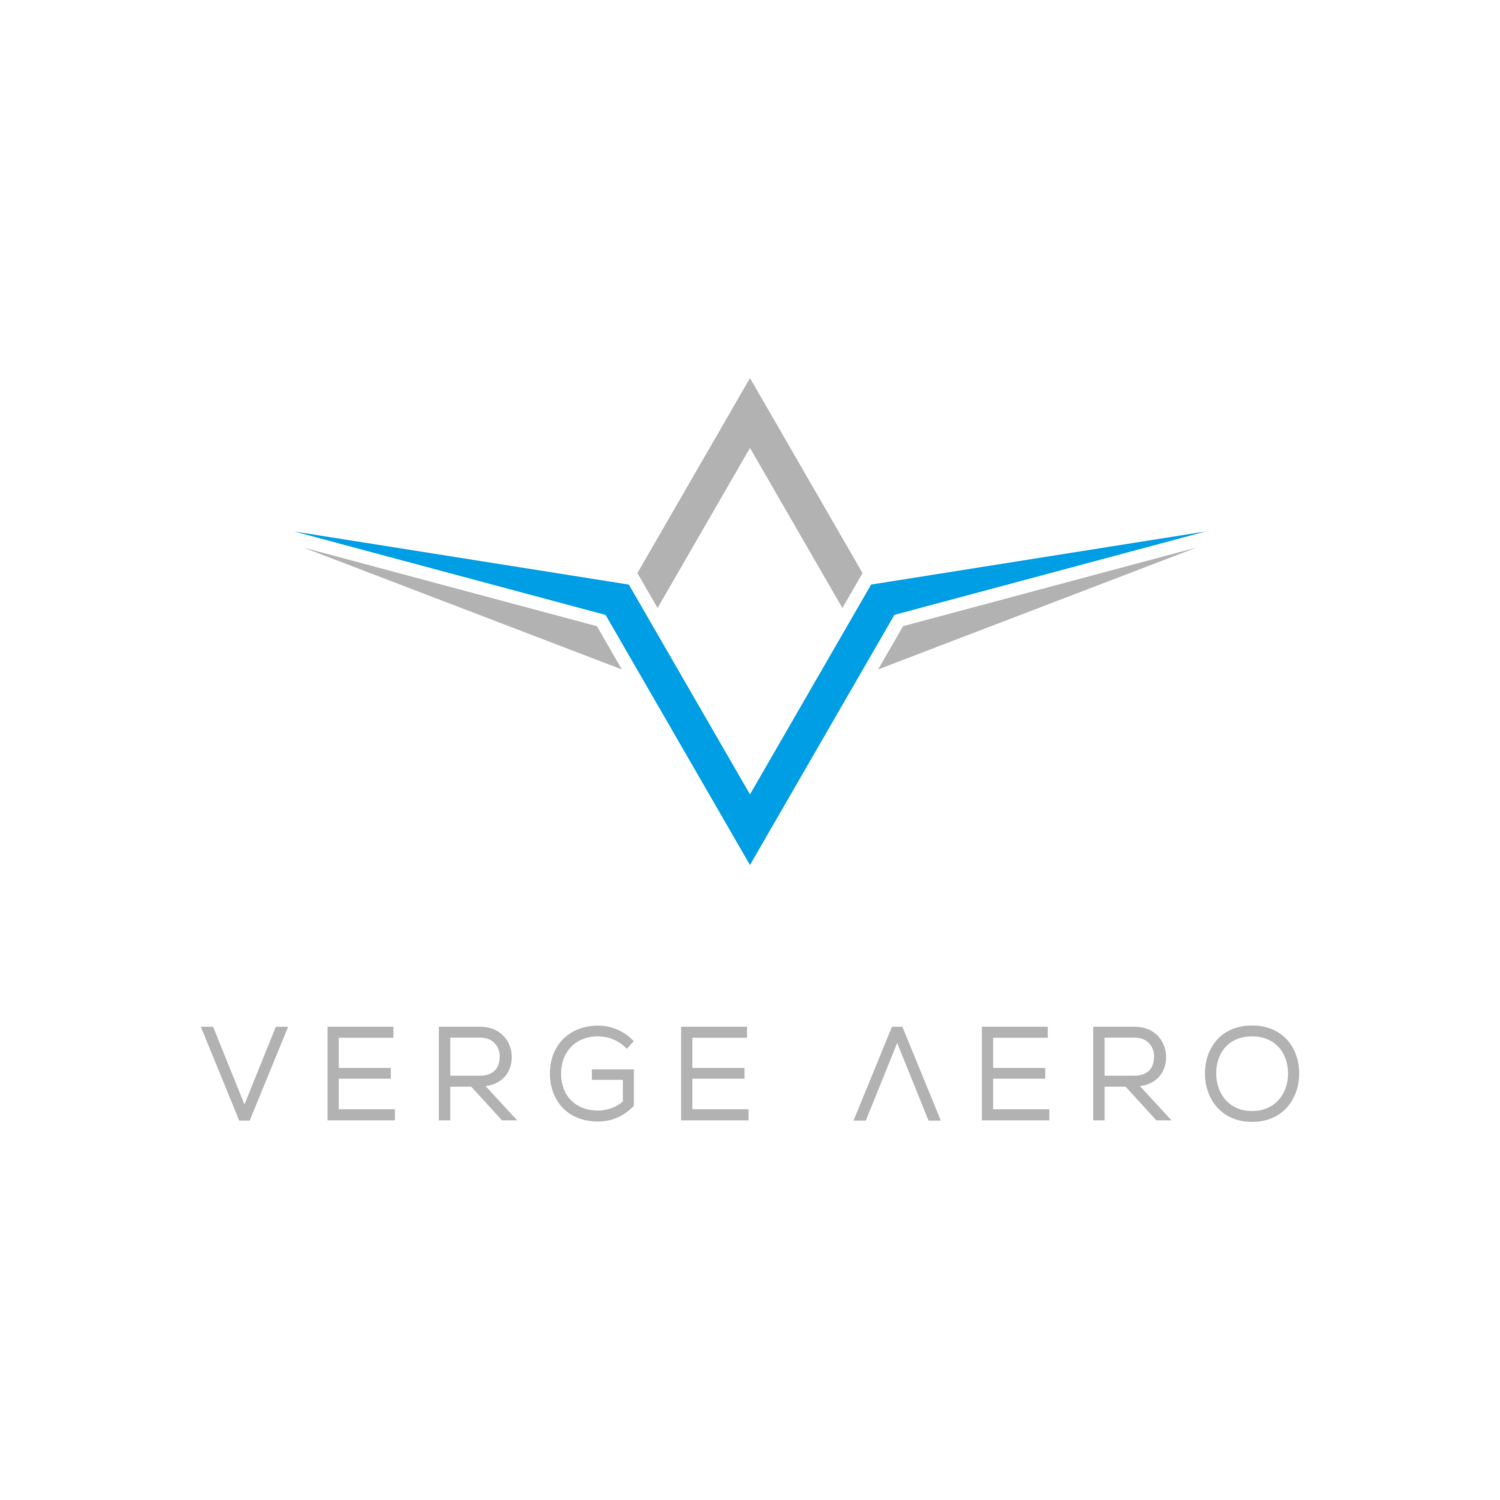 Verge+Aero_on+black.png